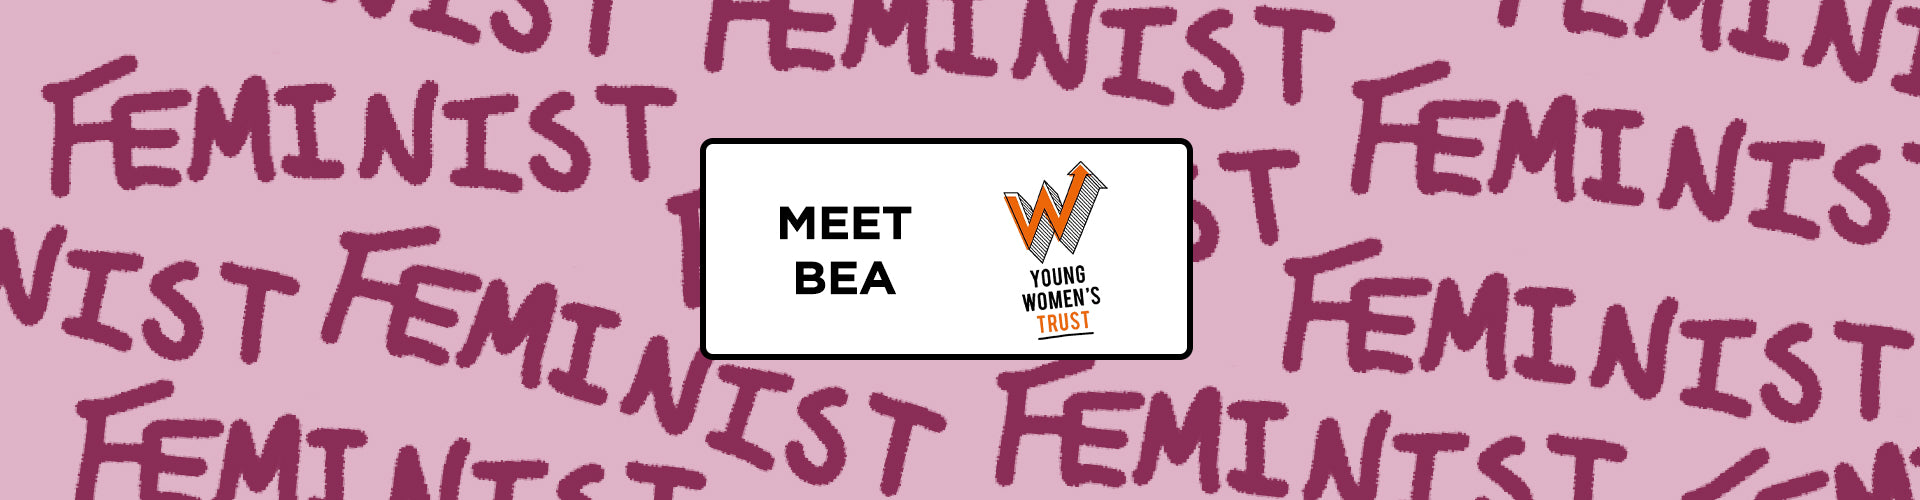 Meet Bea - Advisory Panel member for Young Women’s Trust